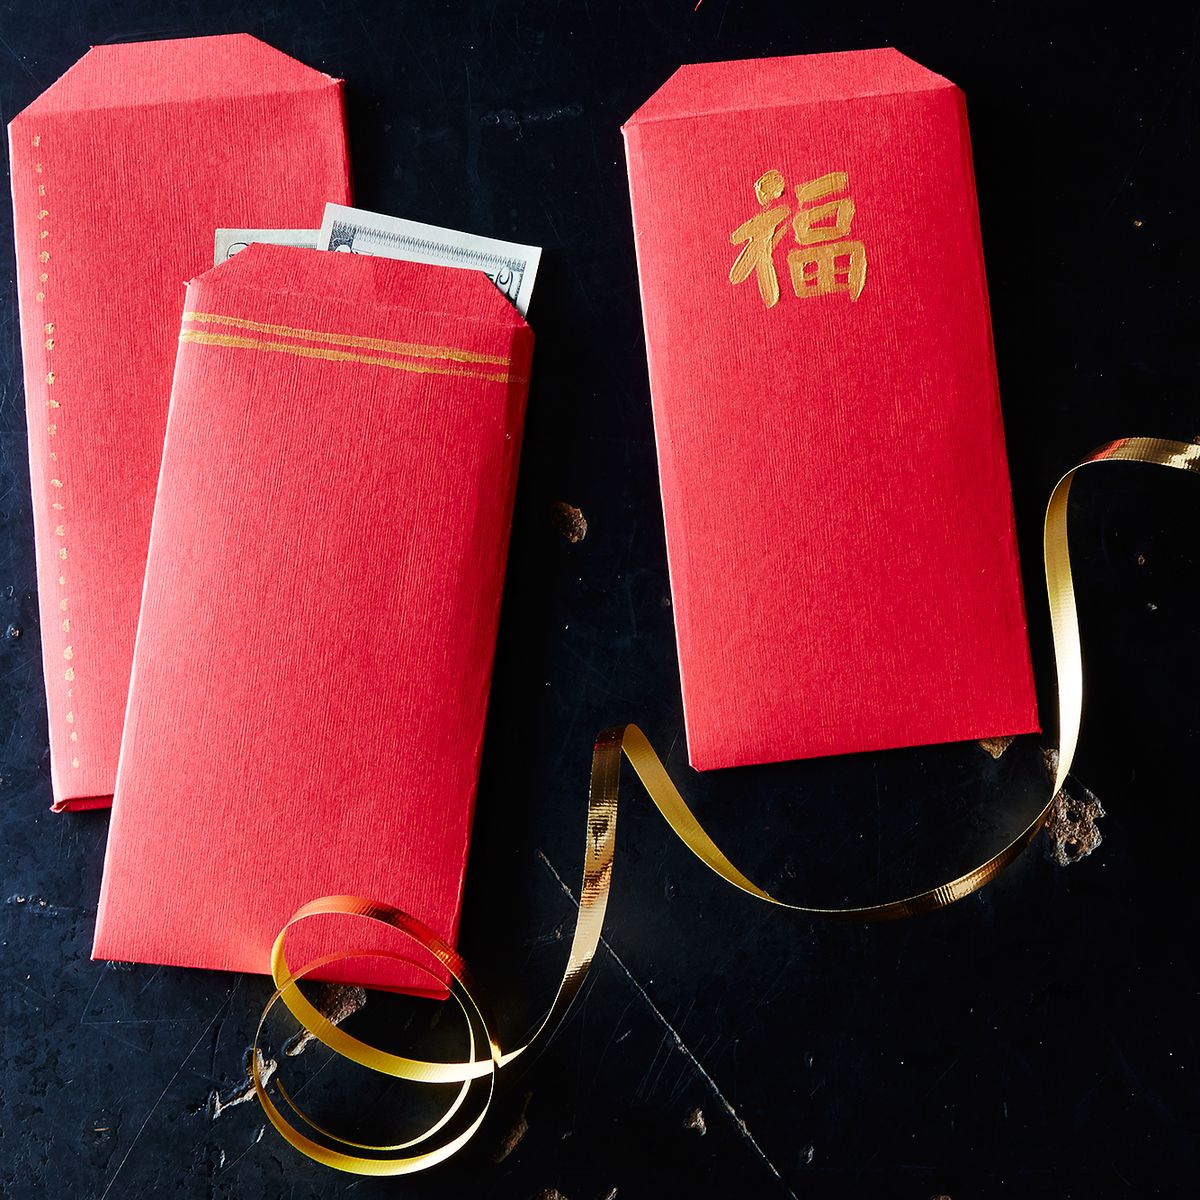 Chinese Red Envelopes DIY Printable for Kids (Video Tutorial)